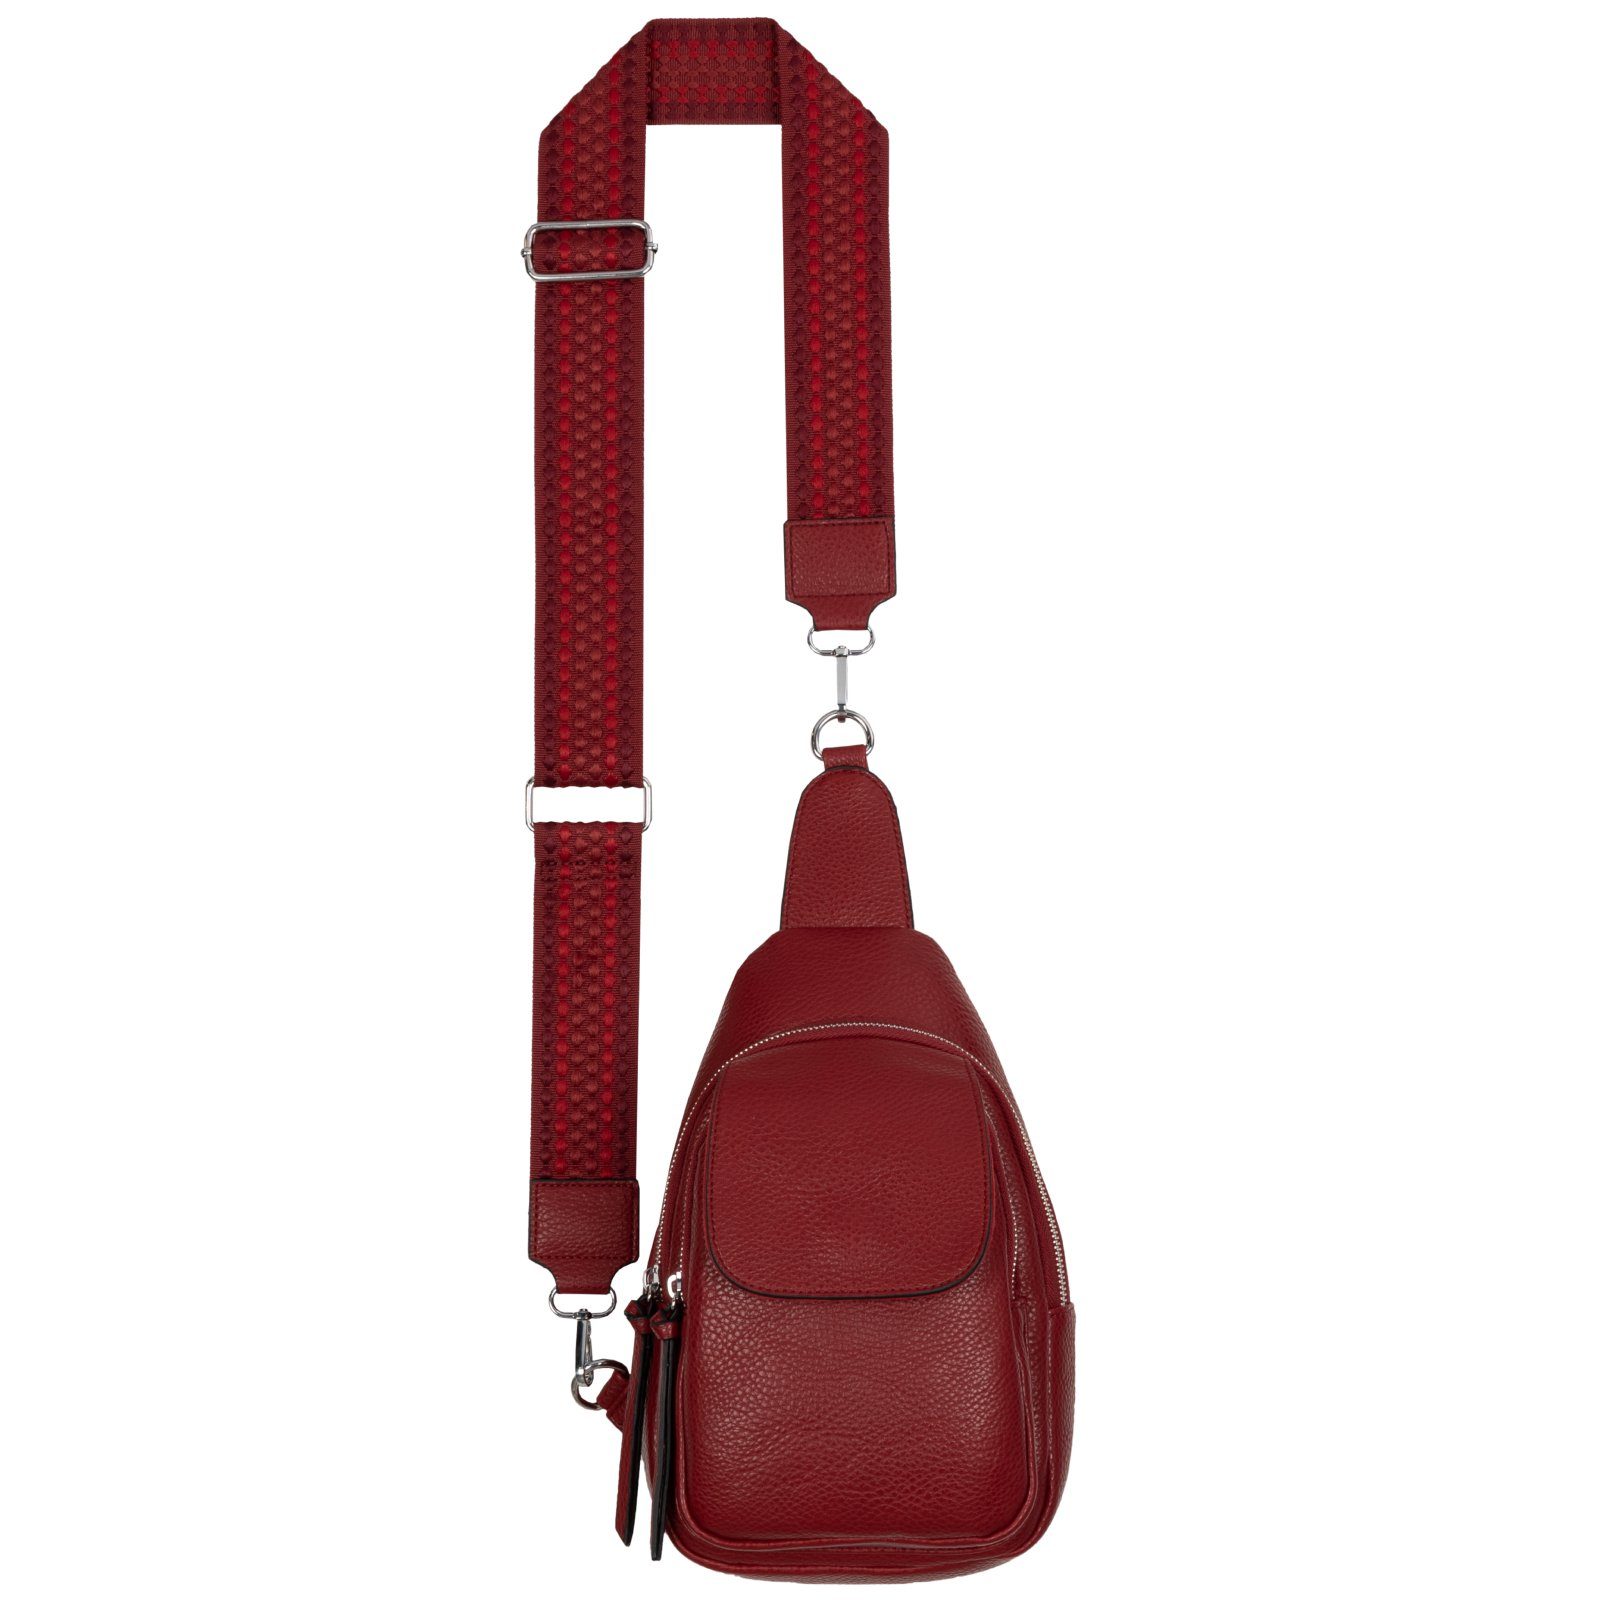 EAAKIE Umhängetasche Brusttasche Umhängetasche Schultertasche Cross Body Bag Kunstleder, als Schultertasche, CrossOver, Umhängetasche tragbar RED